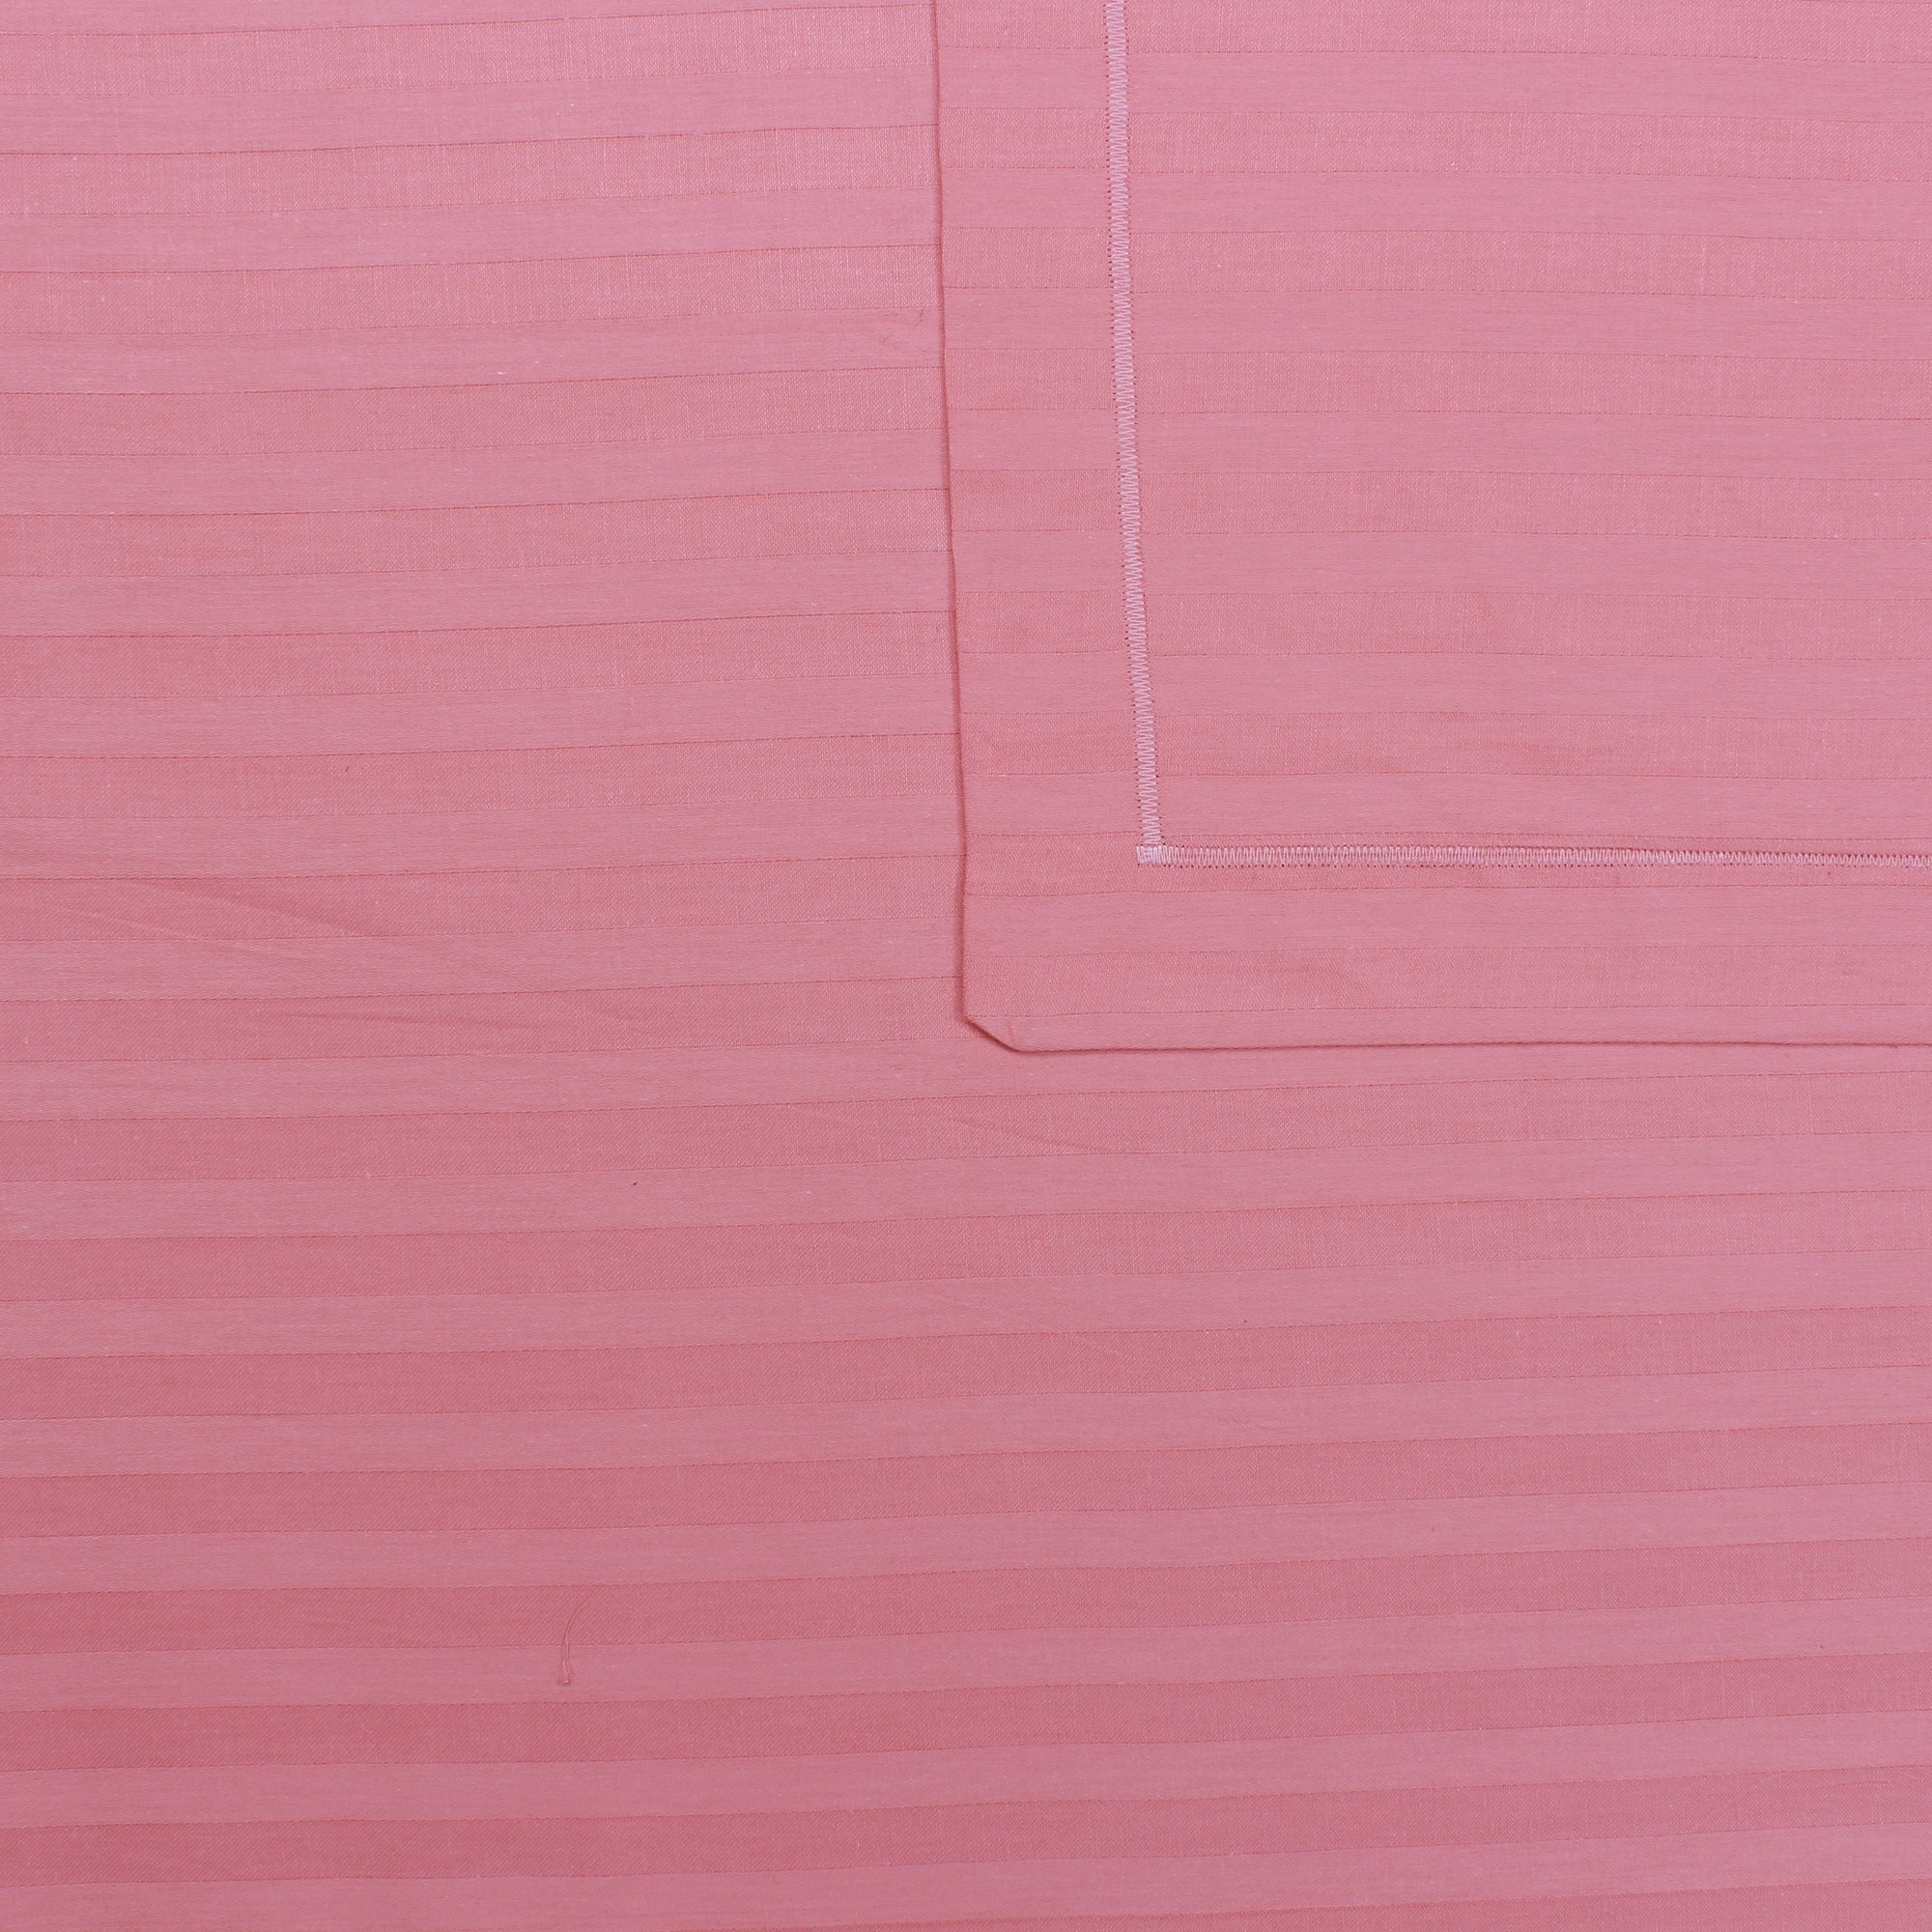 PAVO Tranquil Luxurious Premium Hotel Quality  (Flamingo Pink) King size Bedsheet